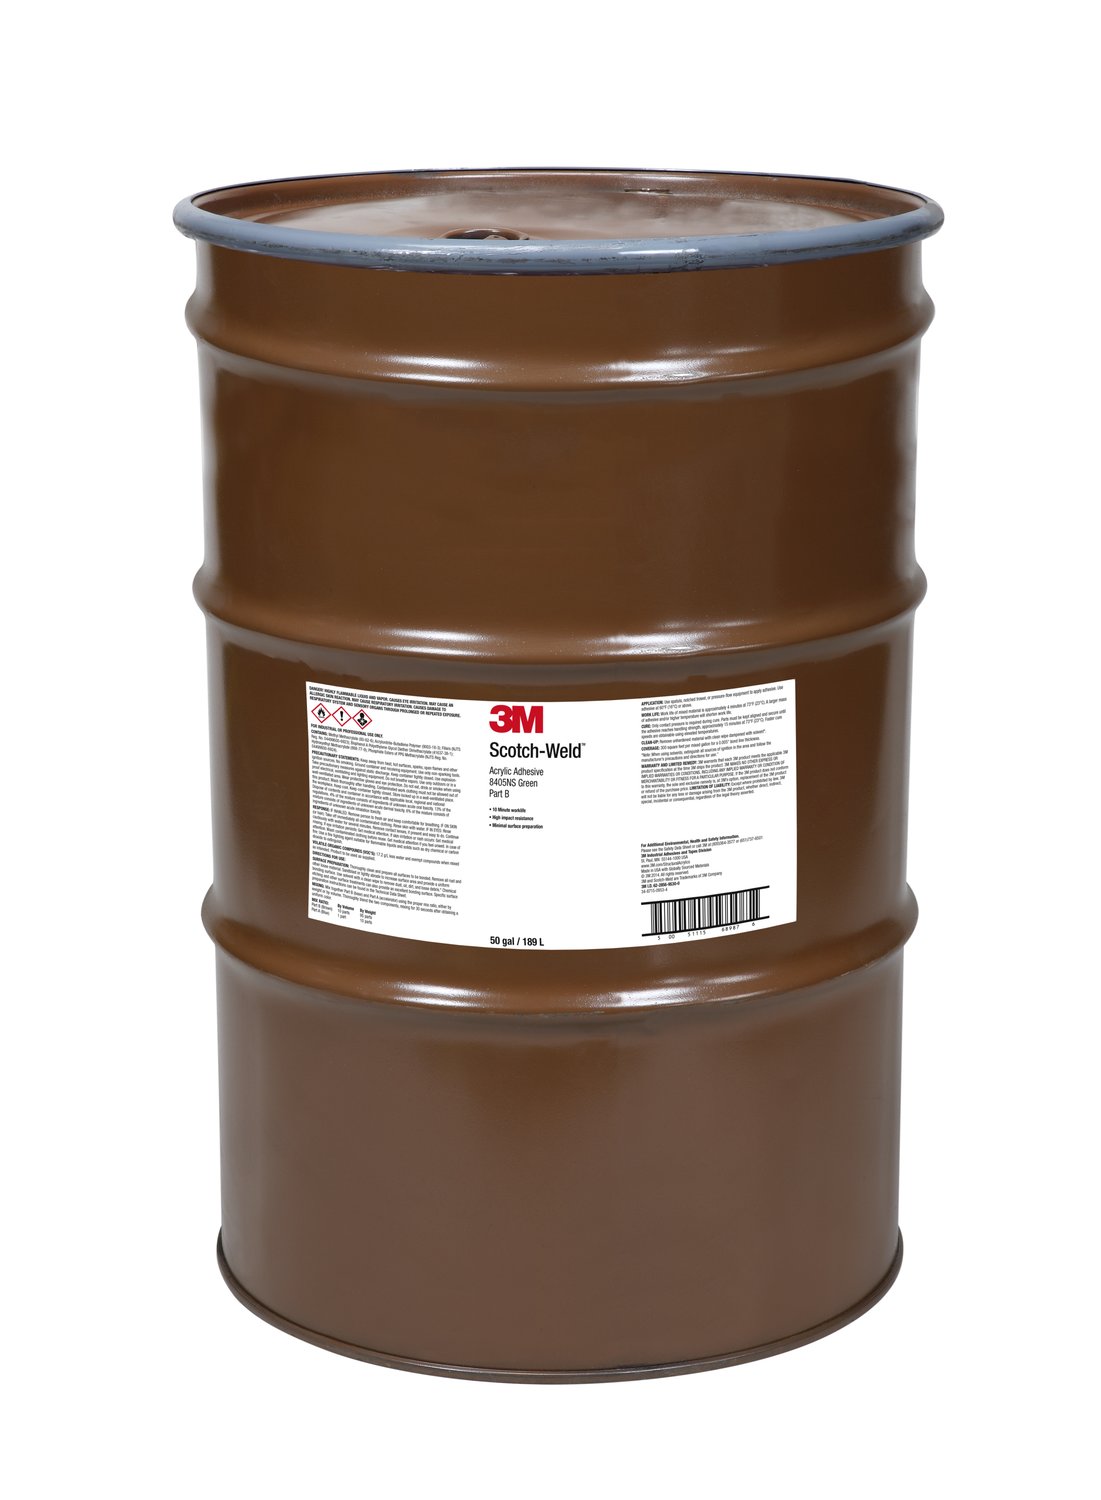 7100084534 - 3M Scotch-Weld Acrylic Adhesive 8405NS, Green, Part B, 55 Gallon (50
Gallon Net), Drum